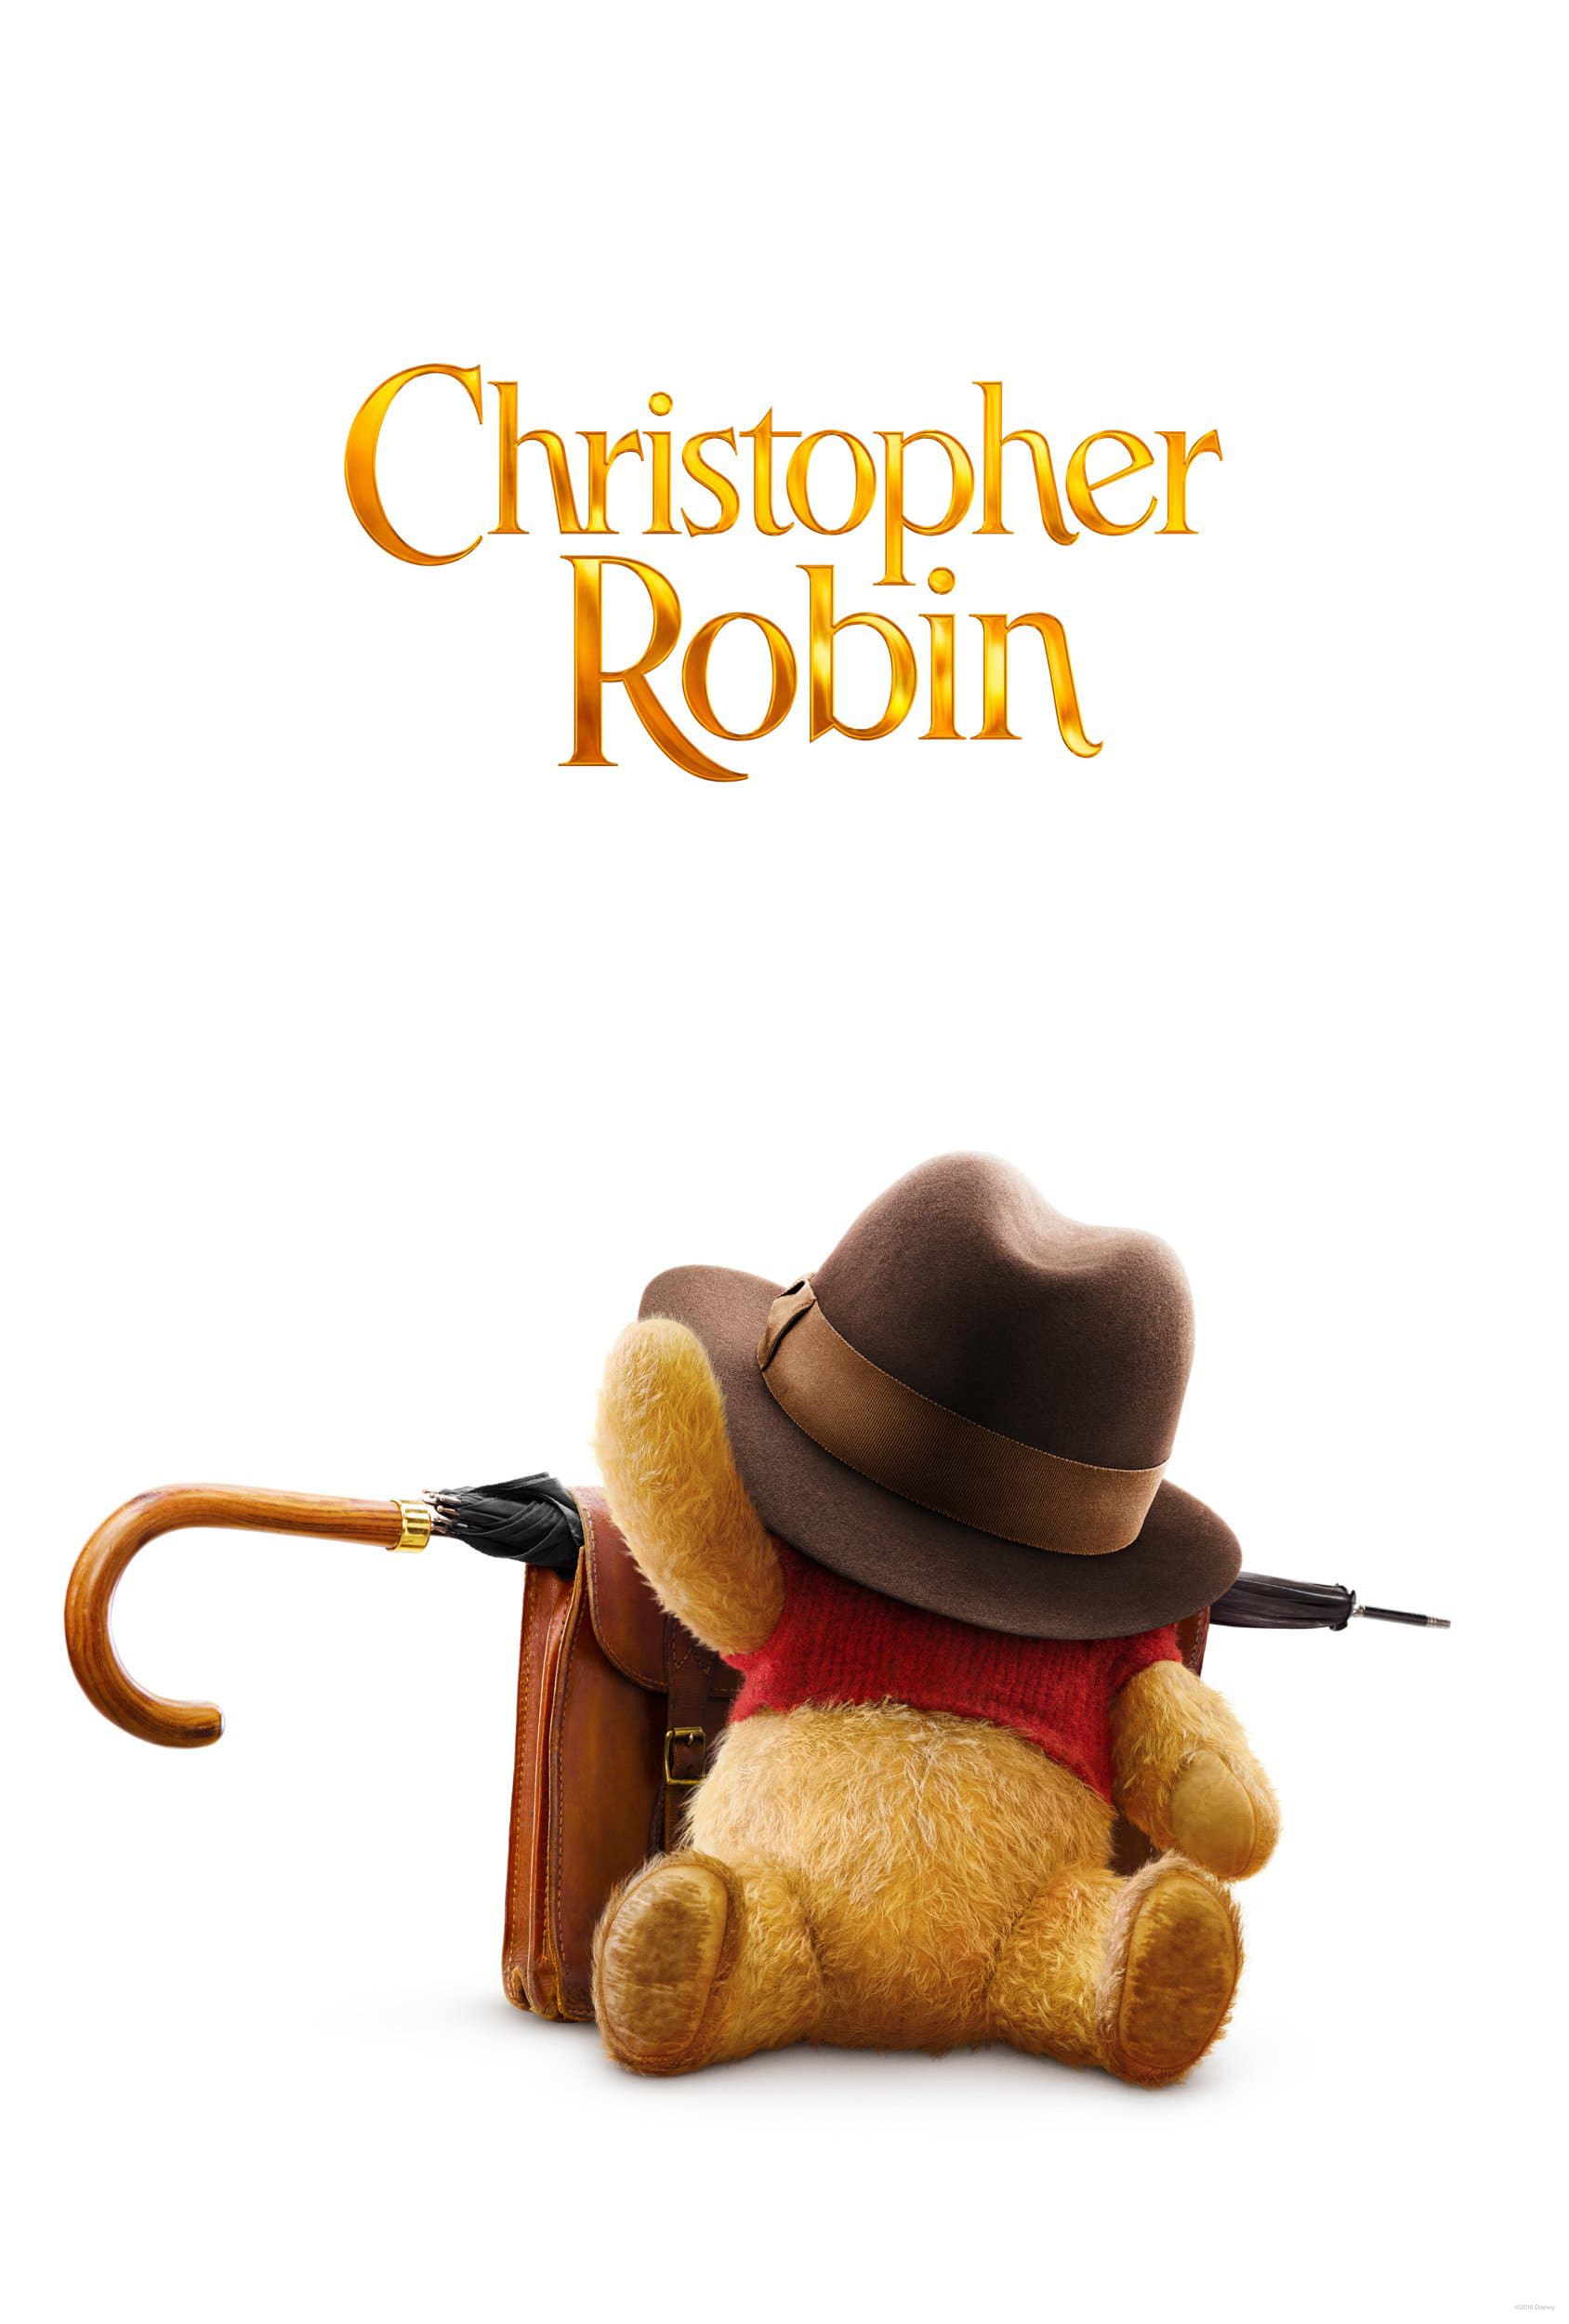 Poster de la película "Christopher Robin"